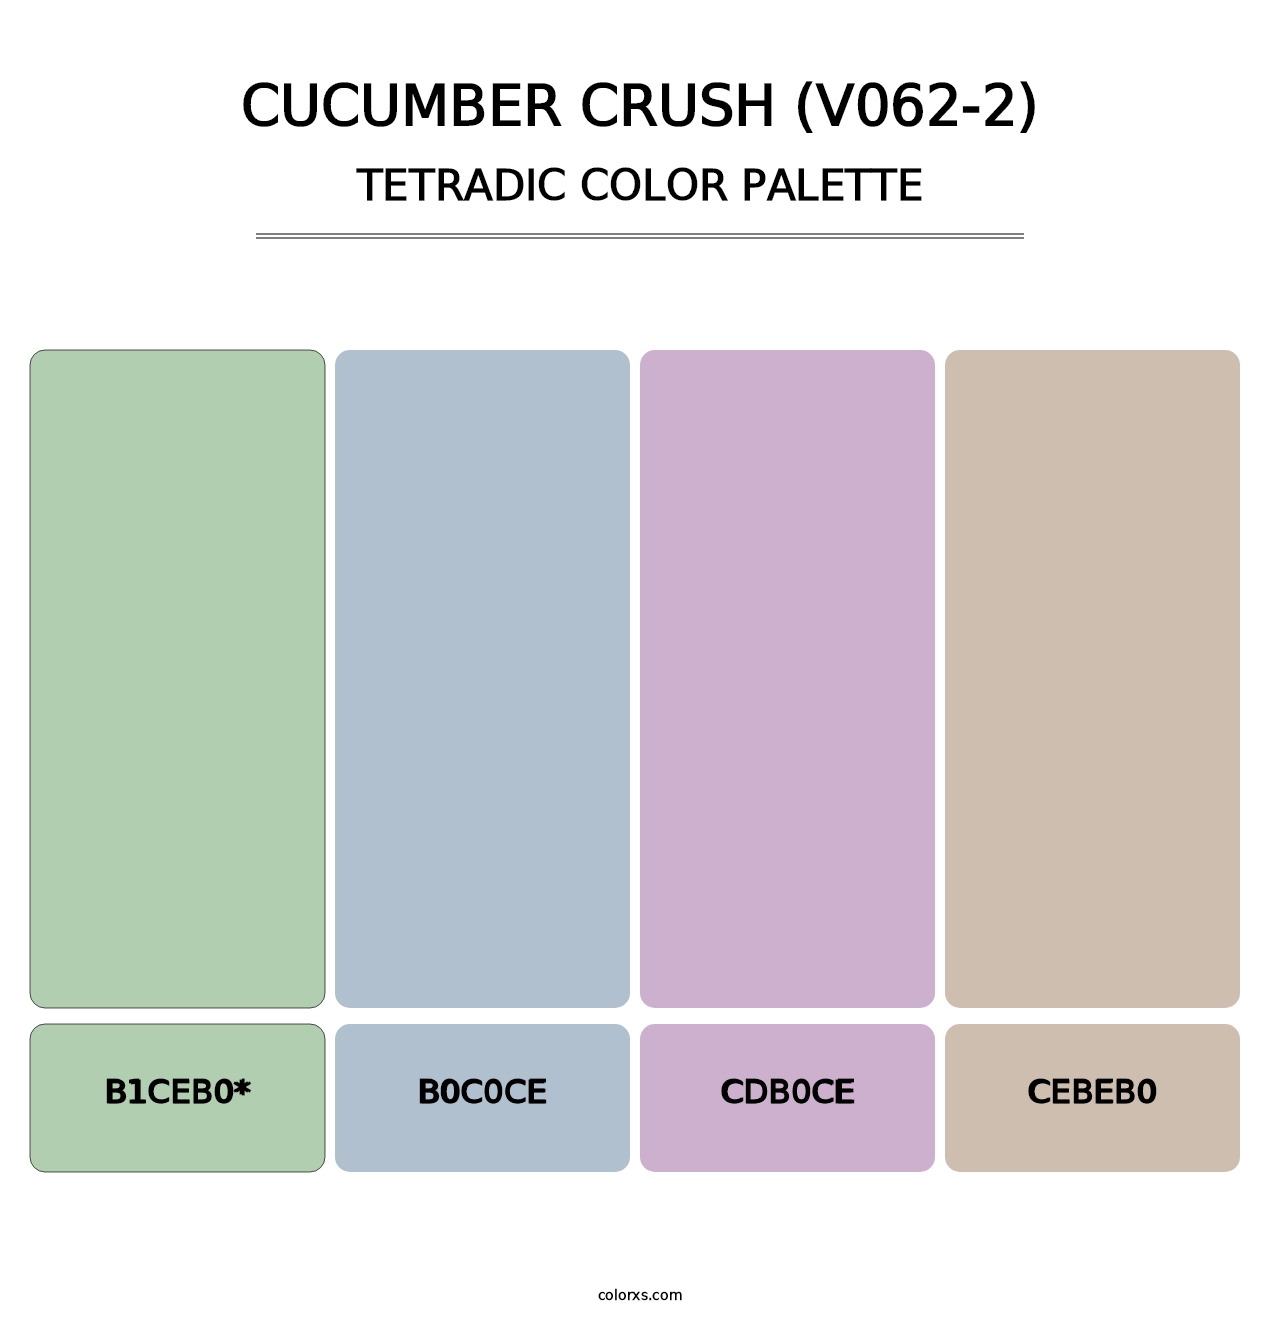 Cucumber Crush (V062-2) - Tetradic Color Palette